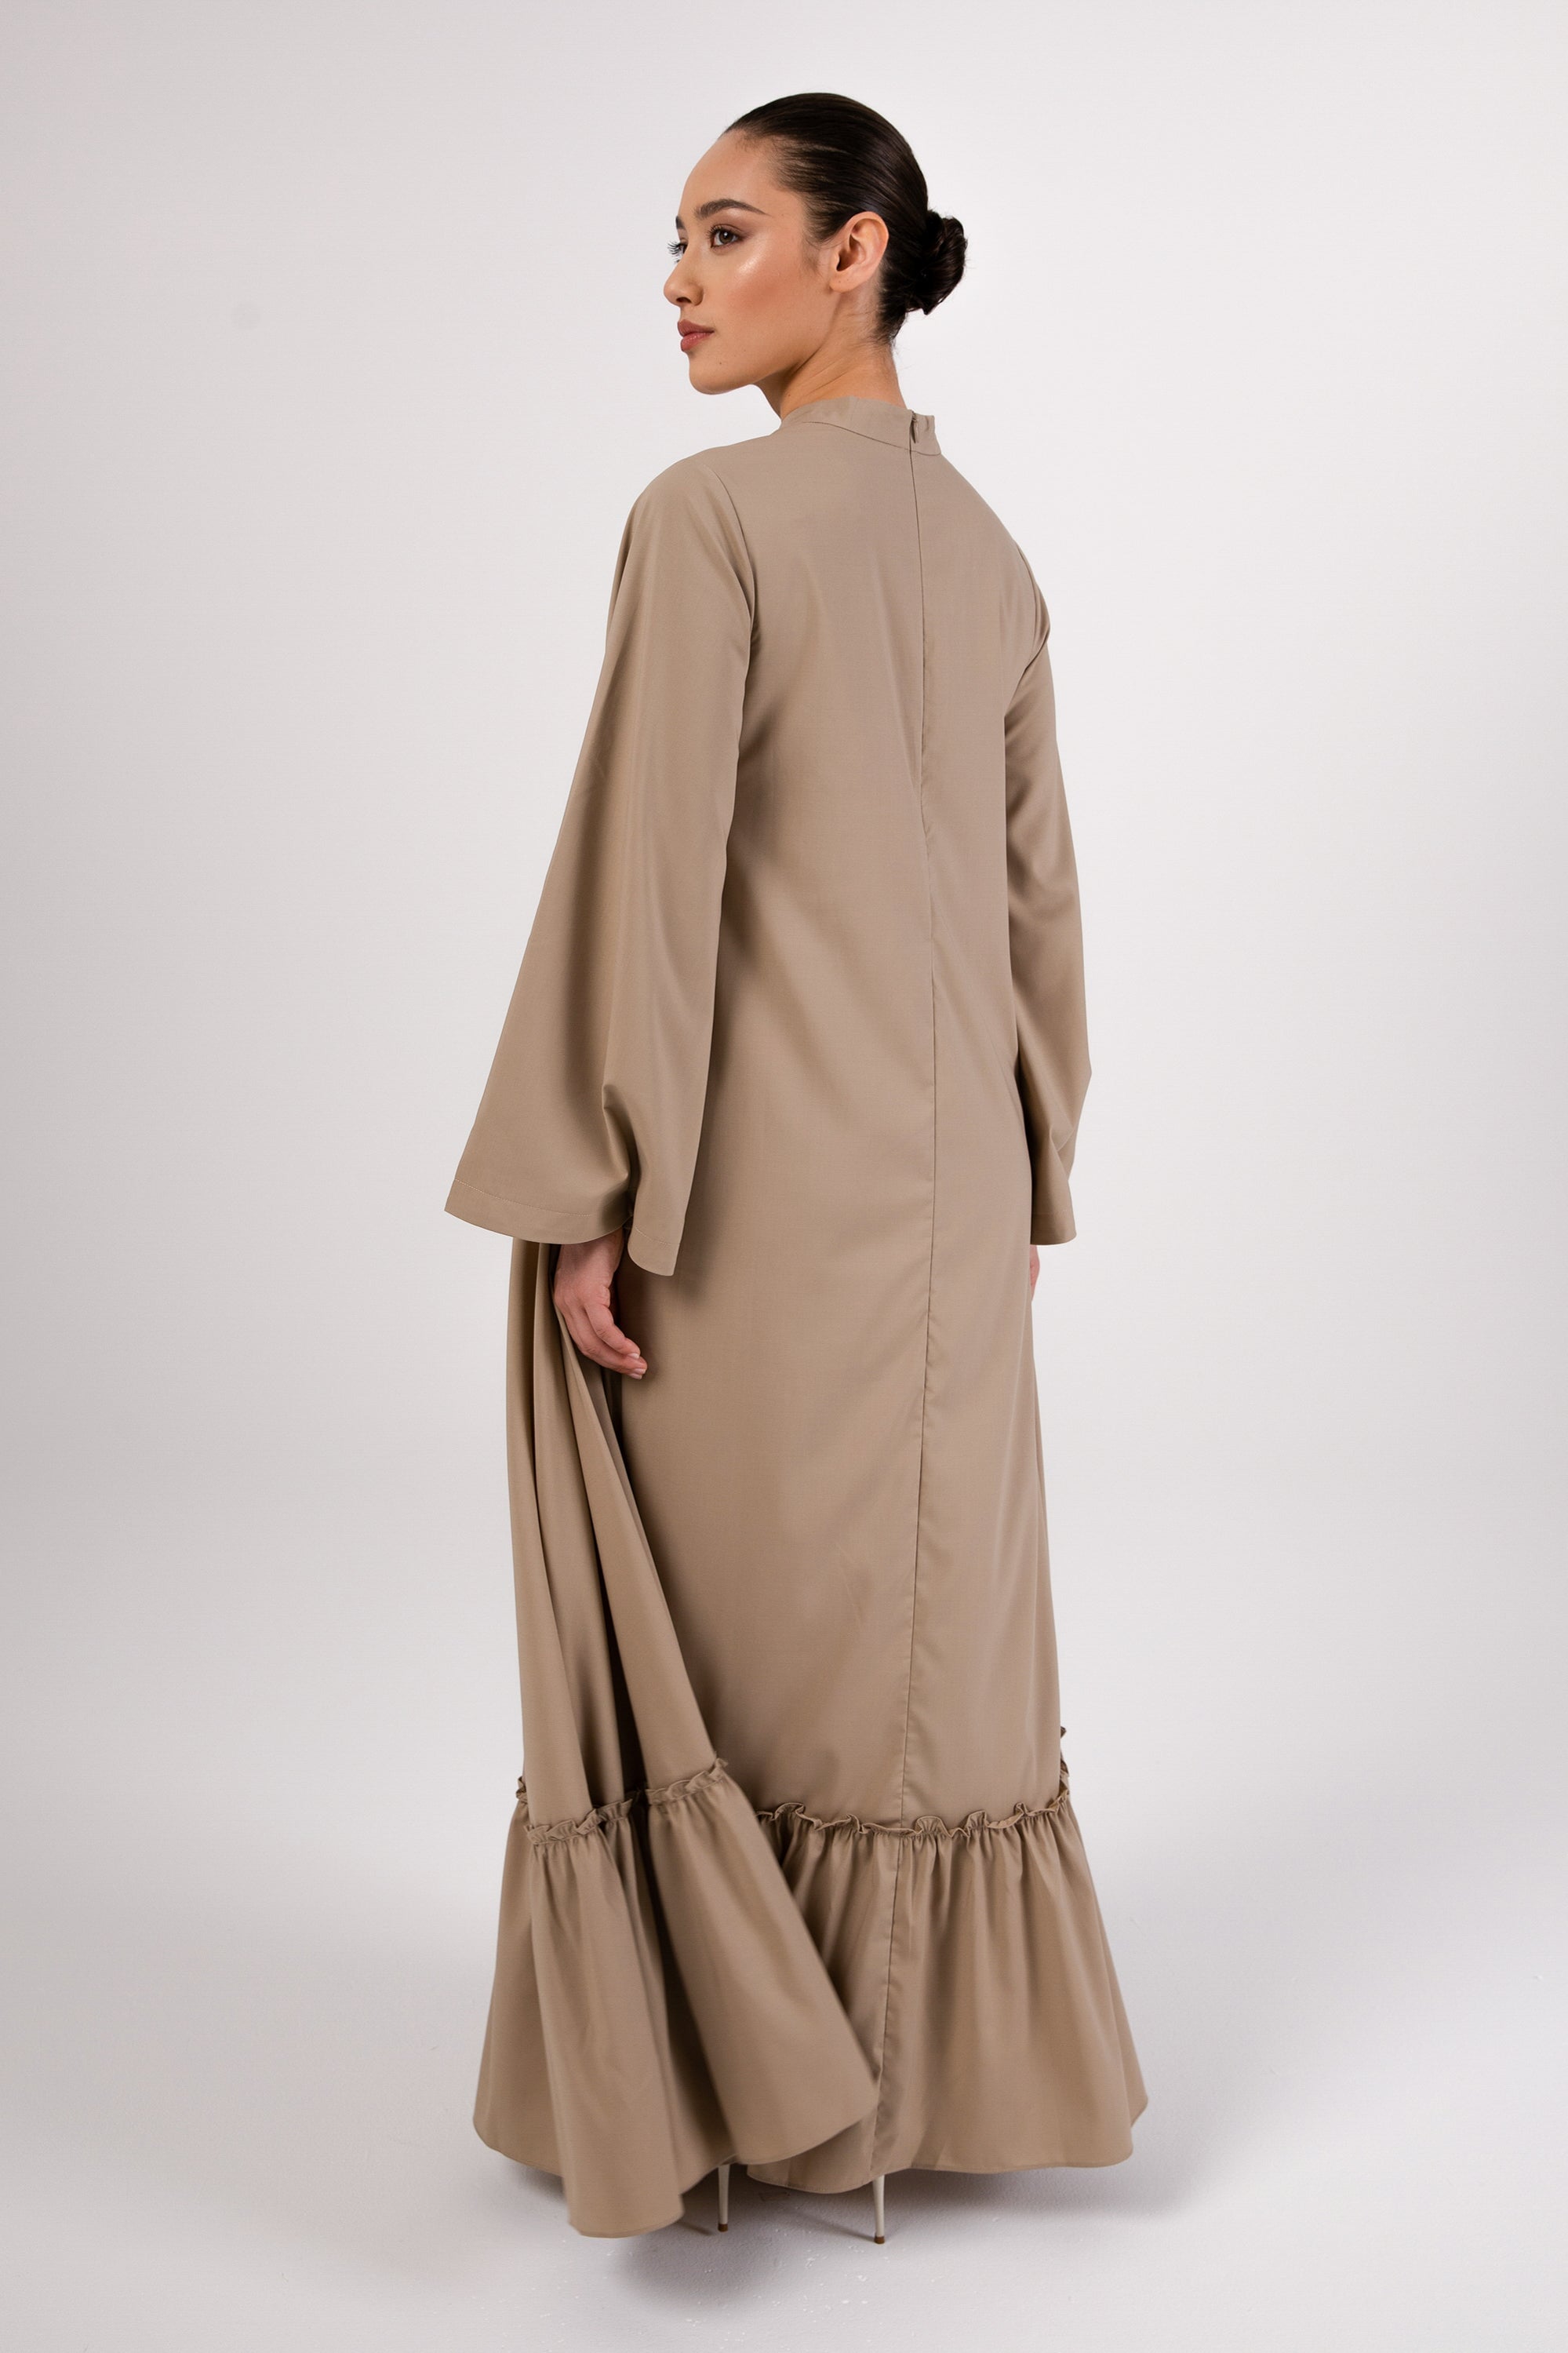 Safira Ruffle Hem Maxi Dress - Khaki Veiled 